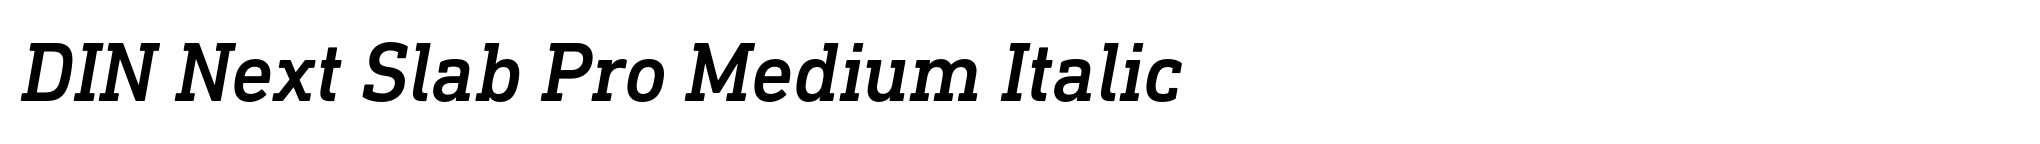 DIN Next Slab Pro Medium Italic image